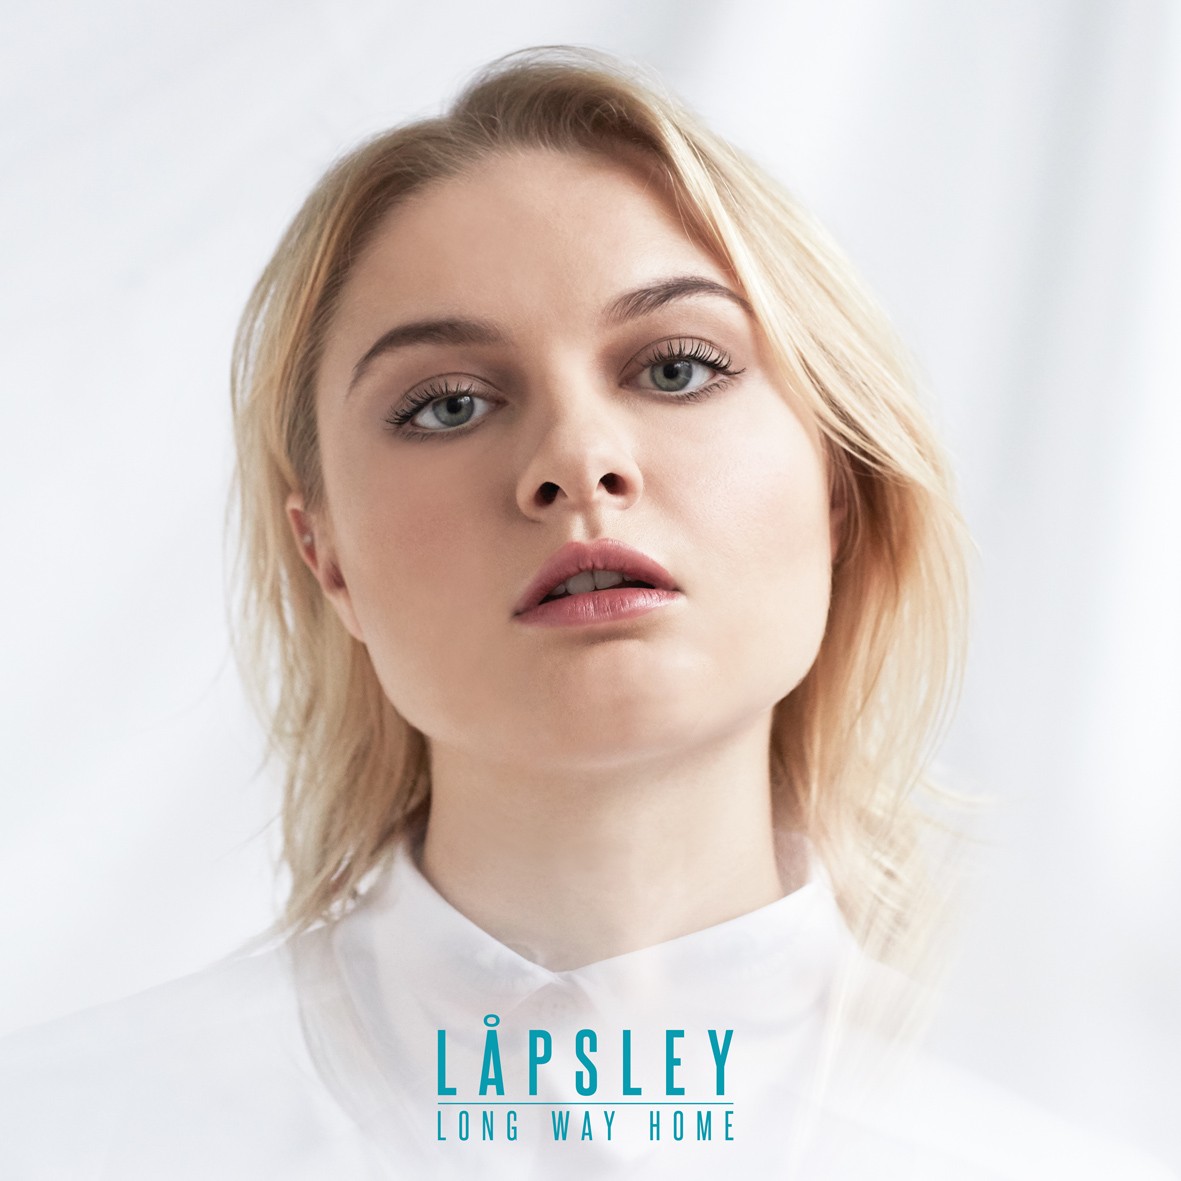 Låpsley's debut album Long Way Home